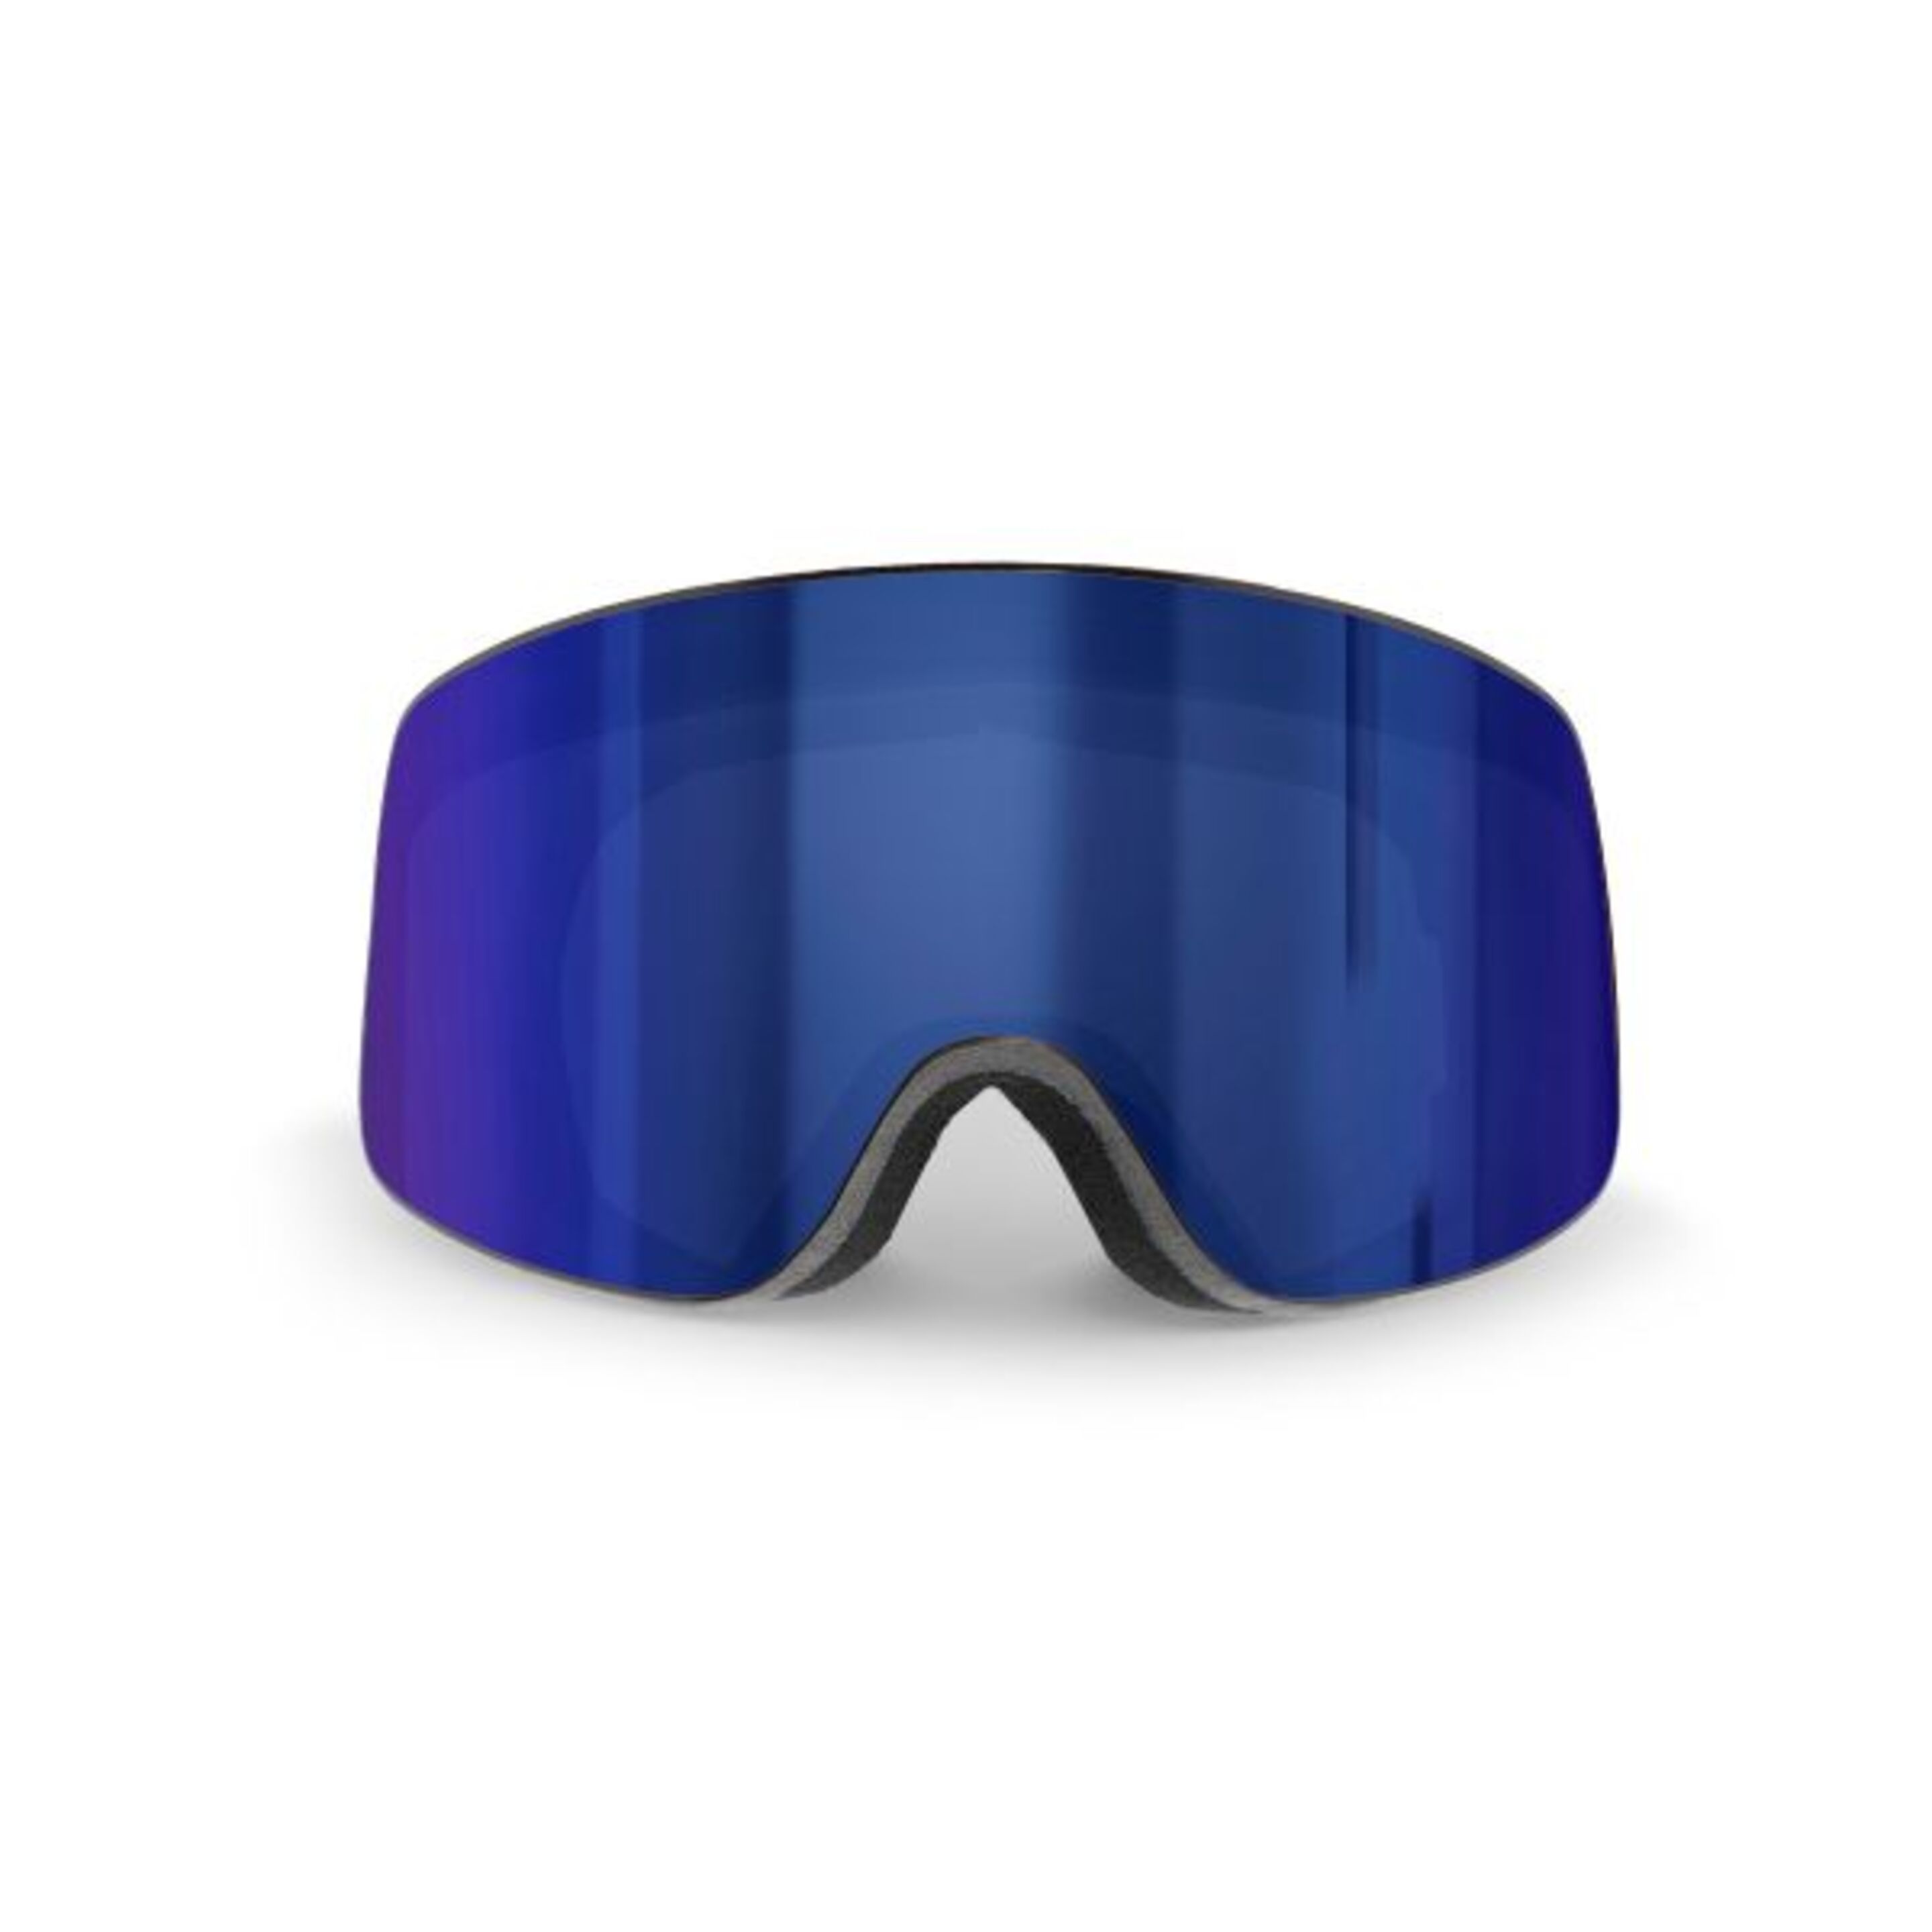 Mascara De Ski Ocean Sunglasses Parbat - Negro/Azul - Gafas Esquí  MKP